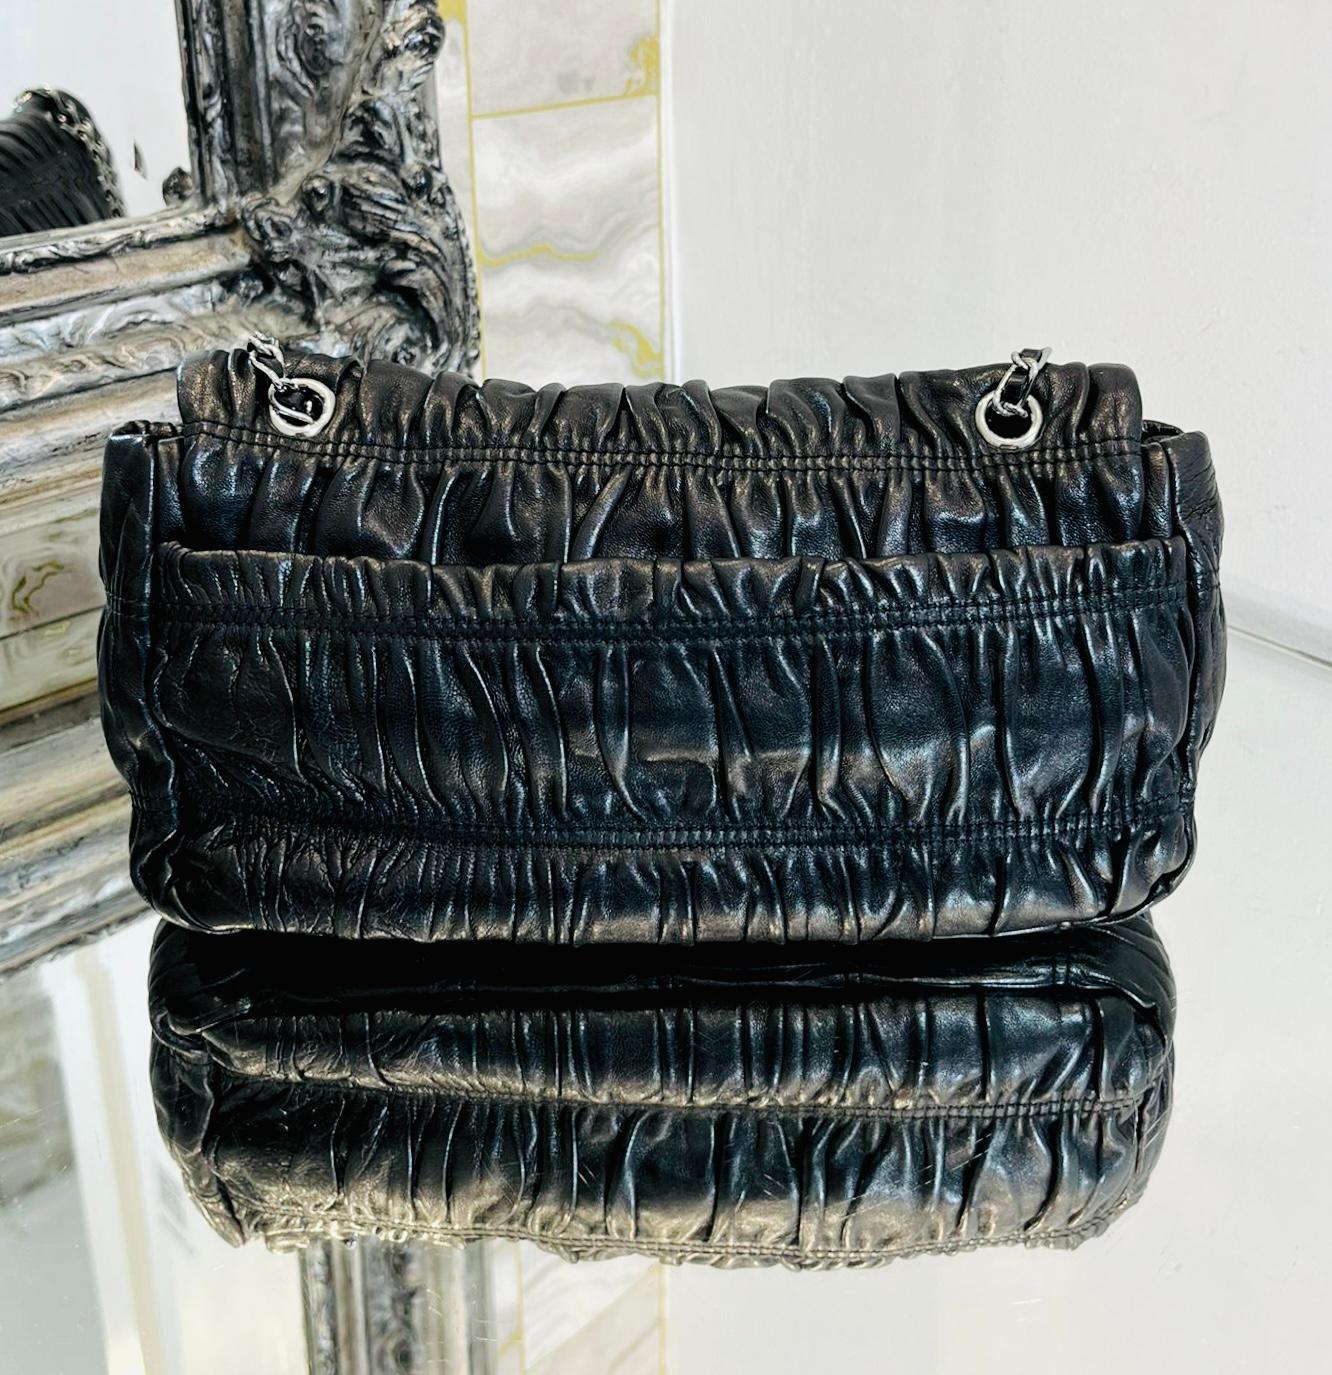 Prada Gaufre Leather Bag 1